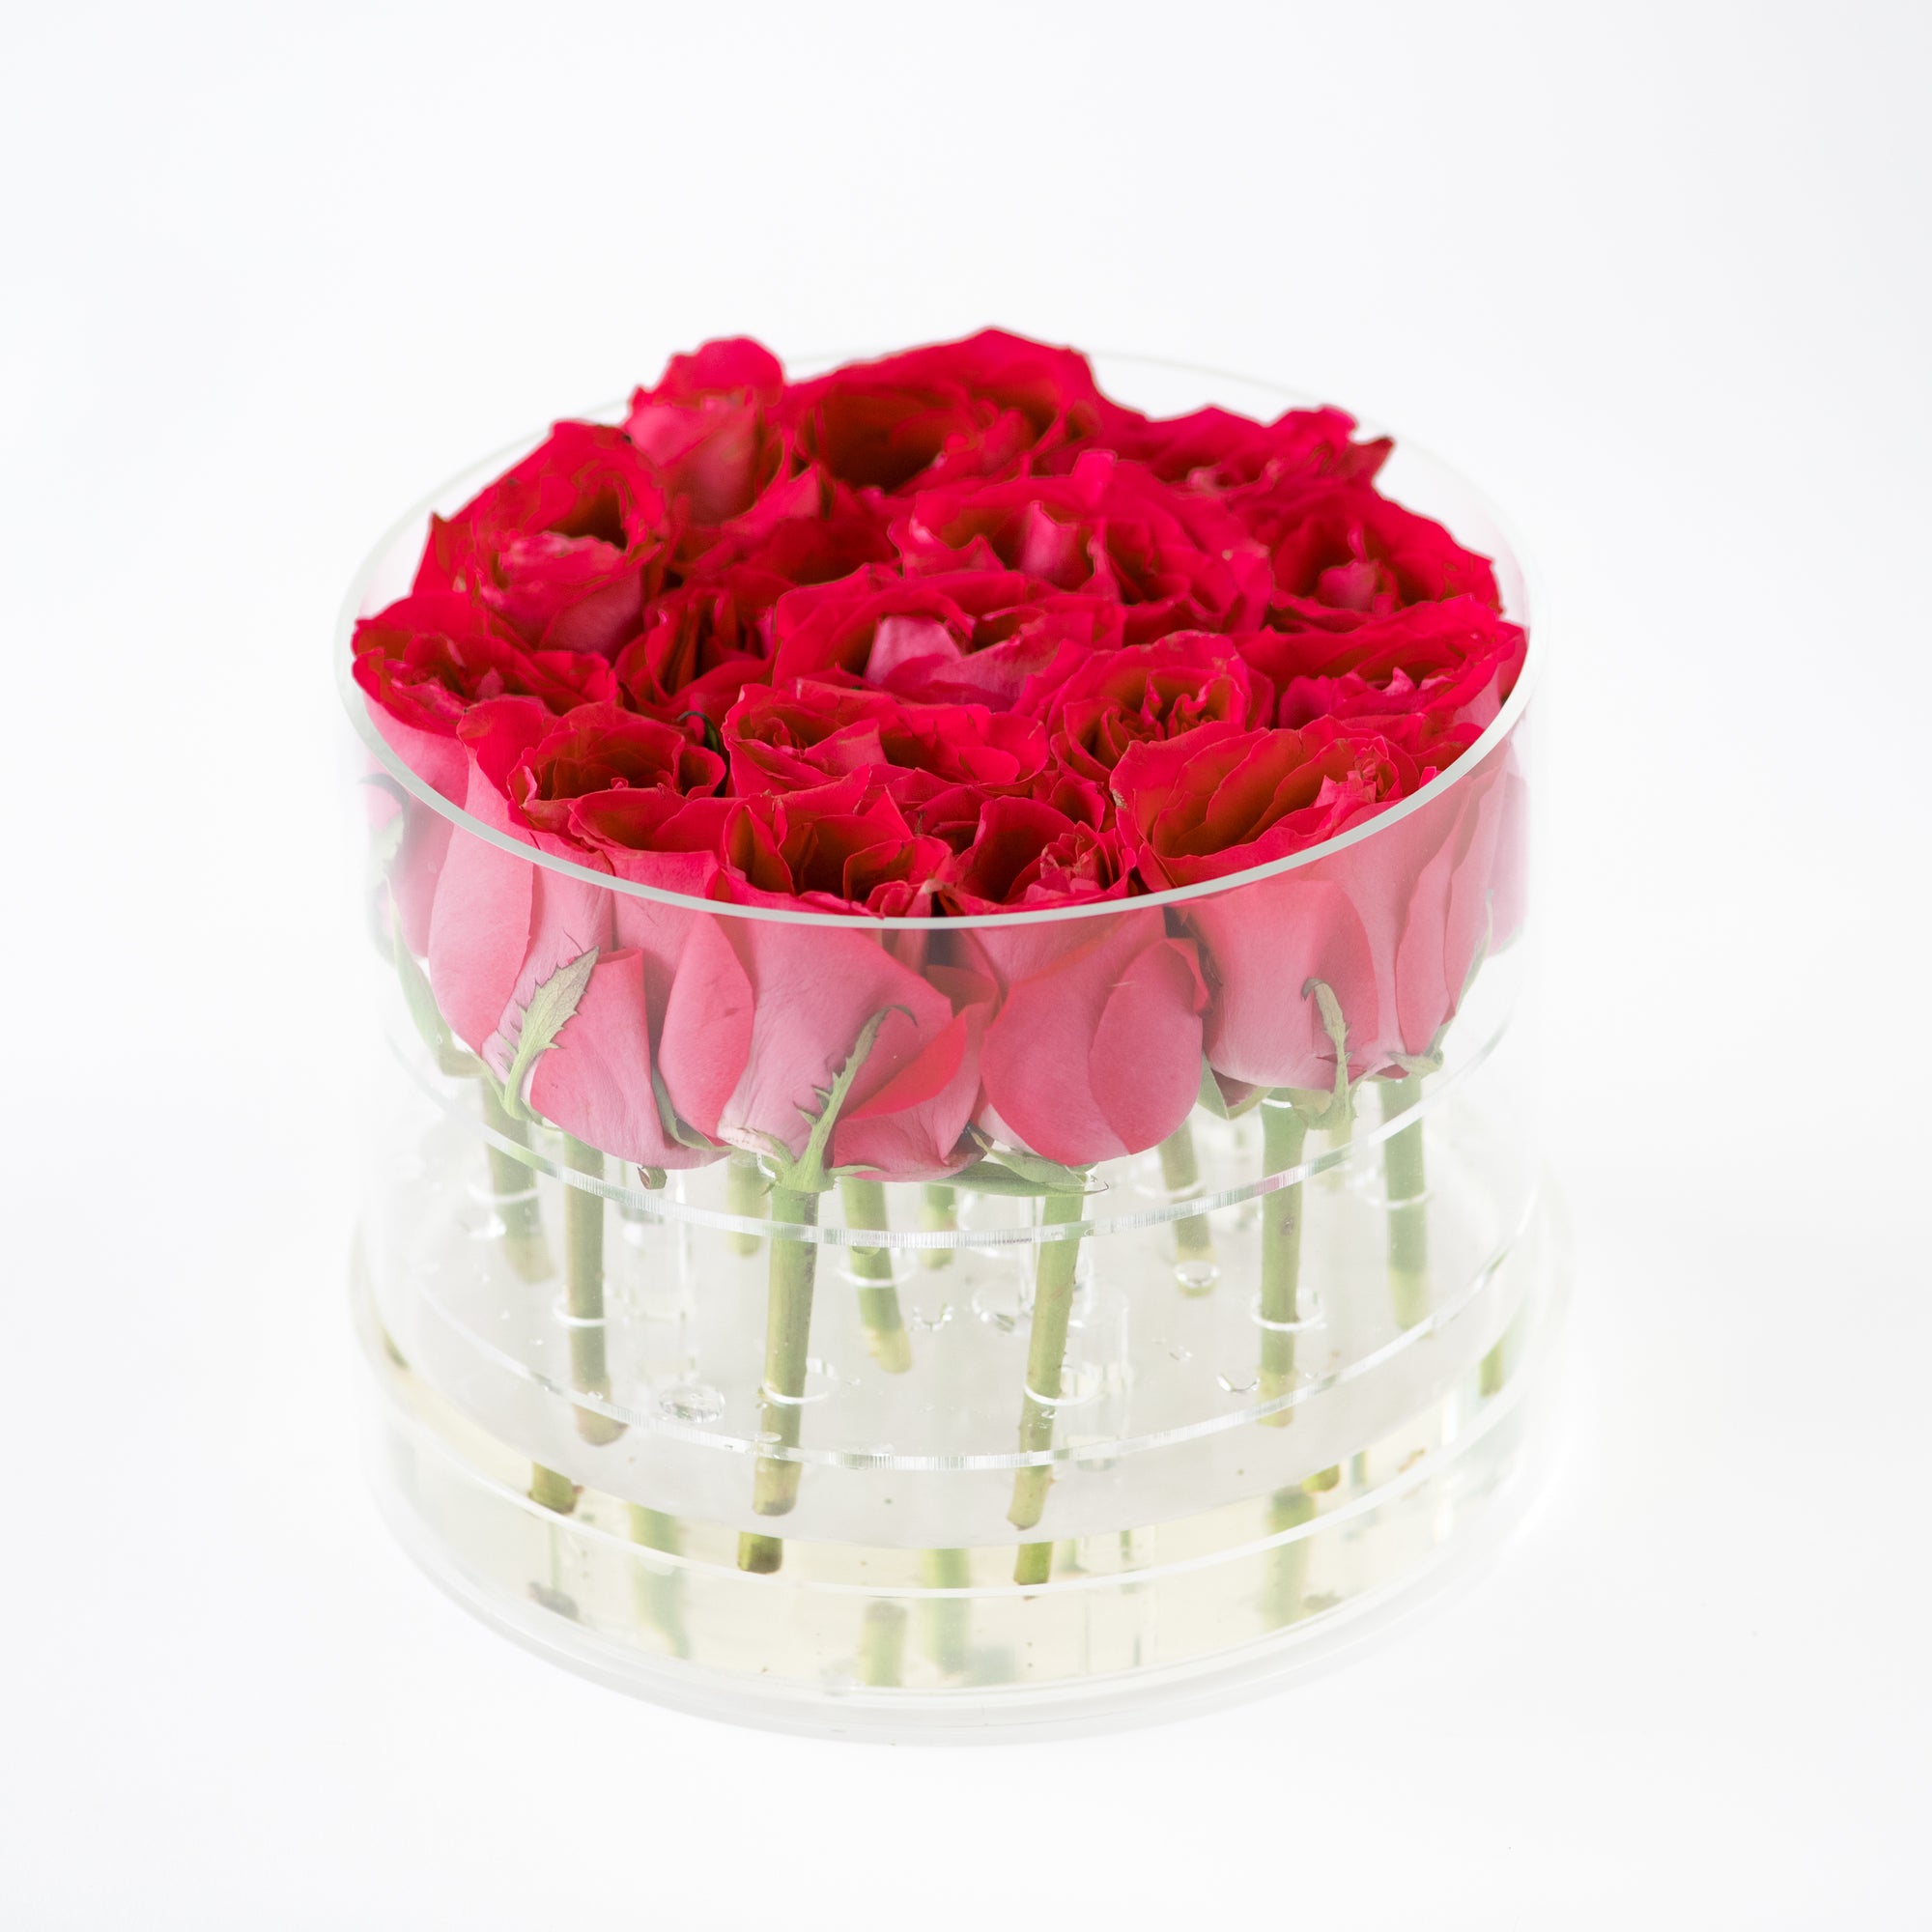 I Love U Box Fresh Roses Flowers Miami Florida. - Robbin Legacy